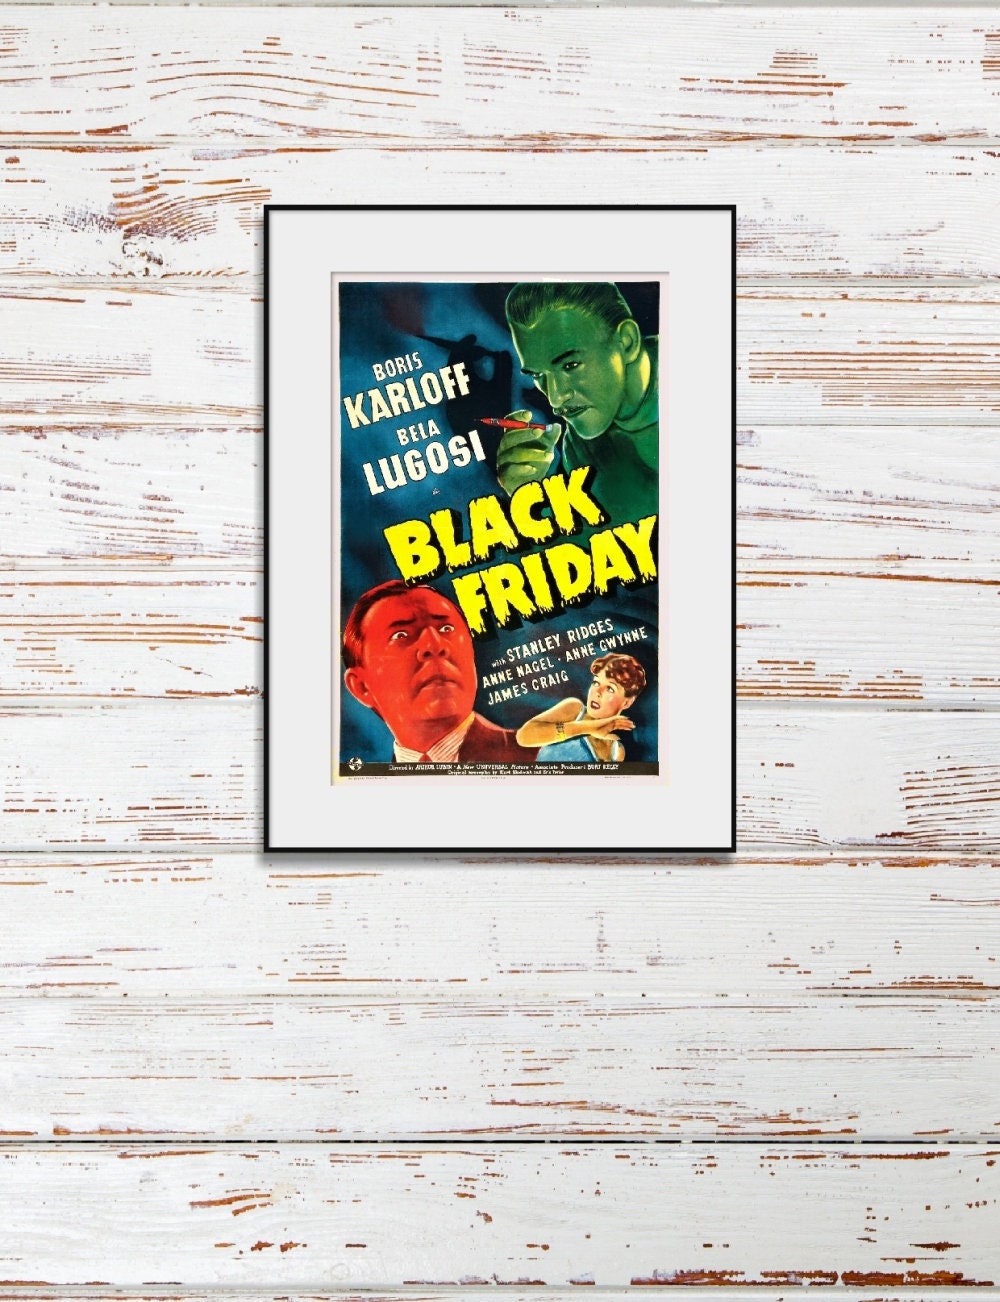 Mediabook Black Friday Cover A Boris Karloff + Bela Lugosi Blu-Ray DVD  Cover B